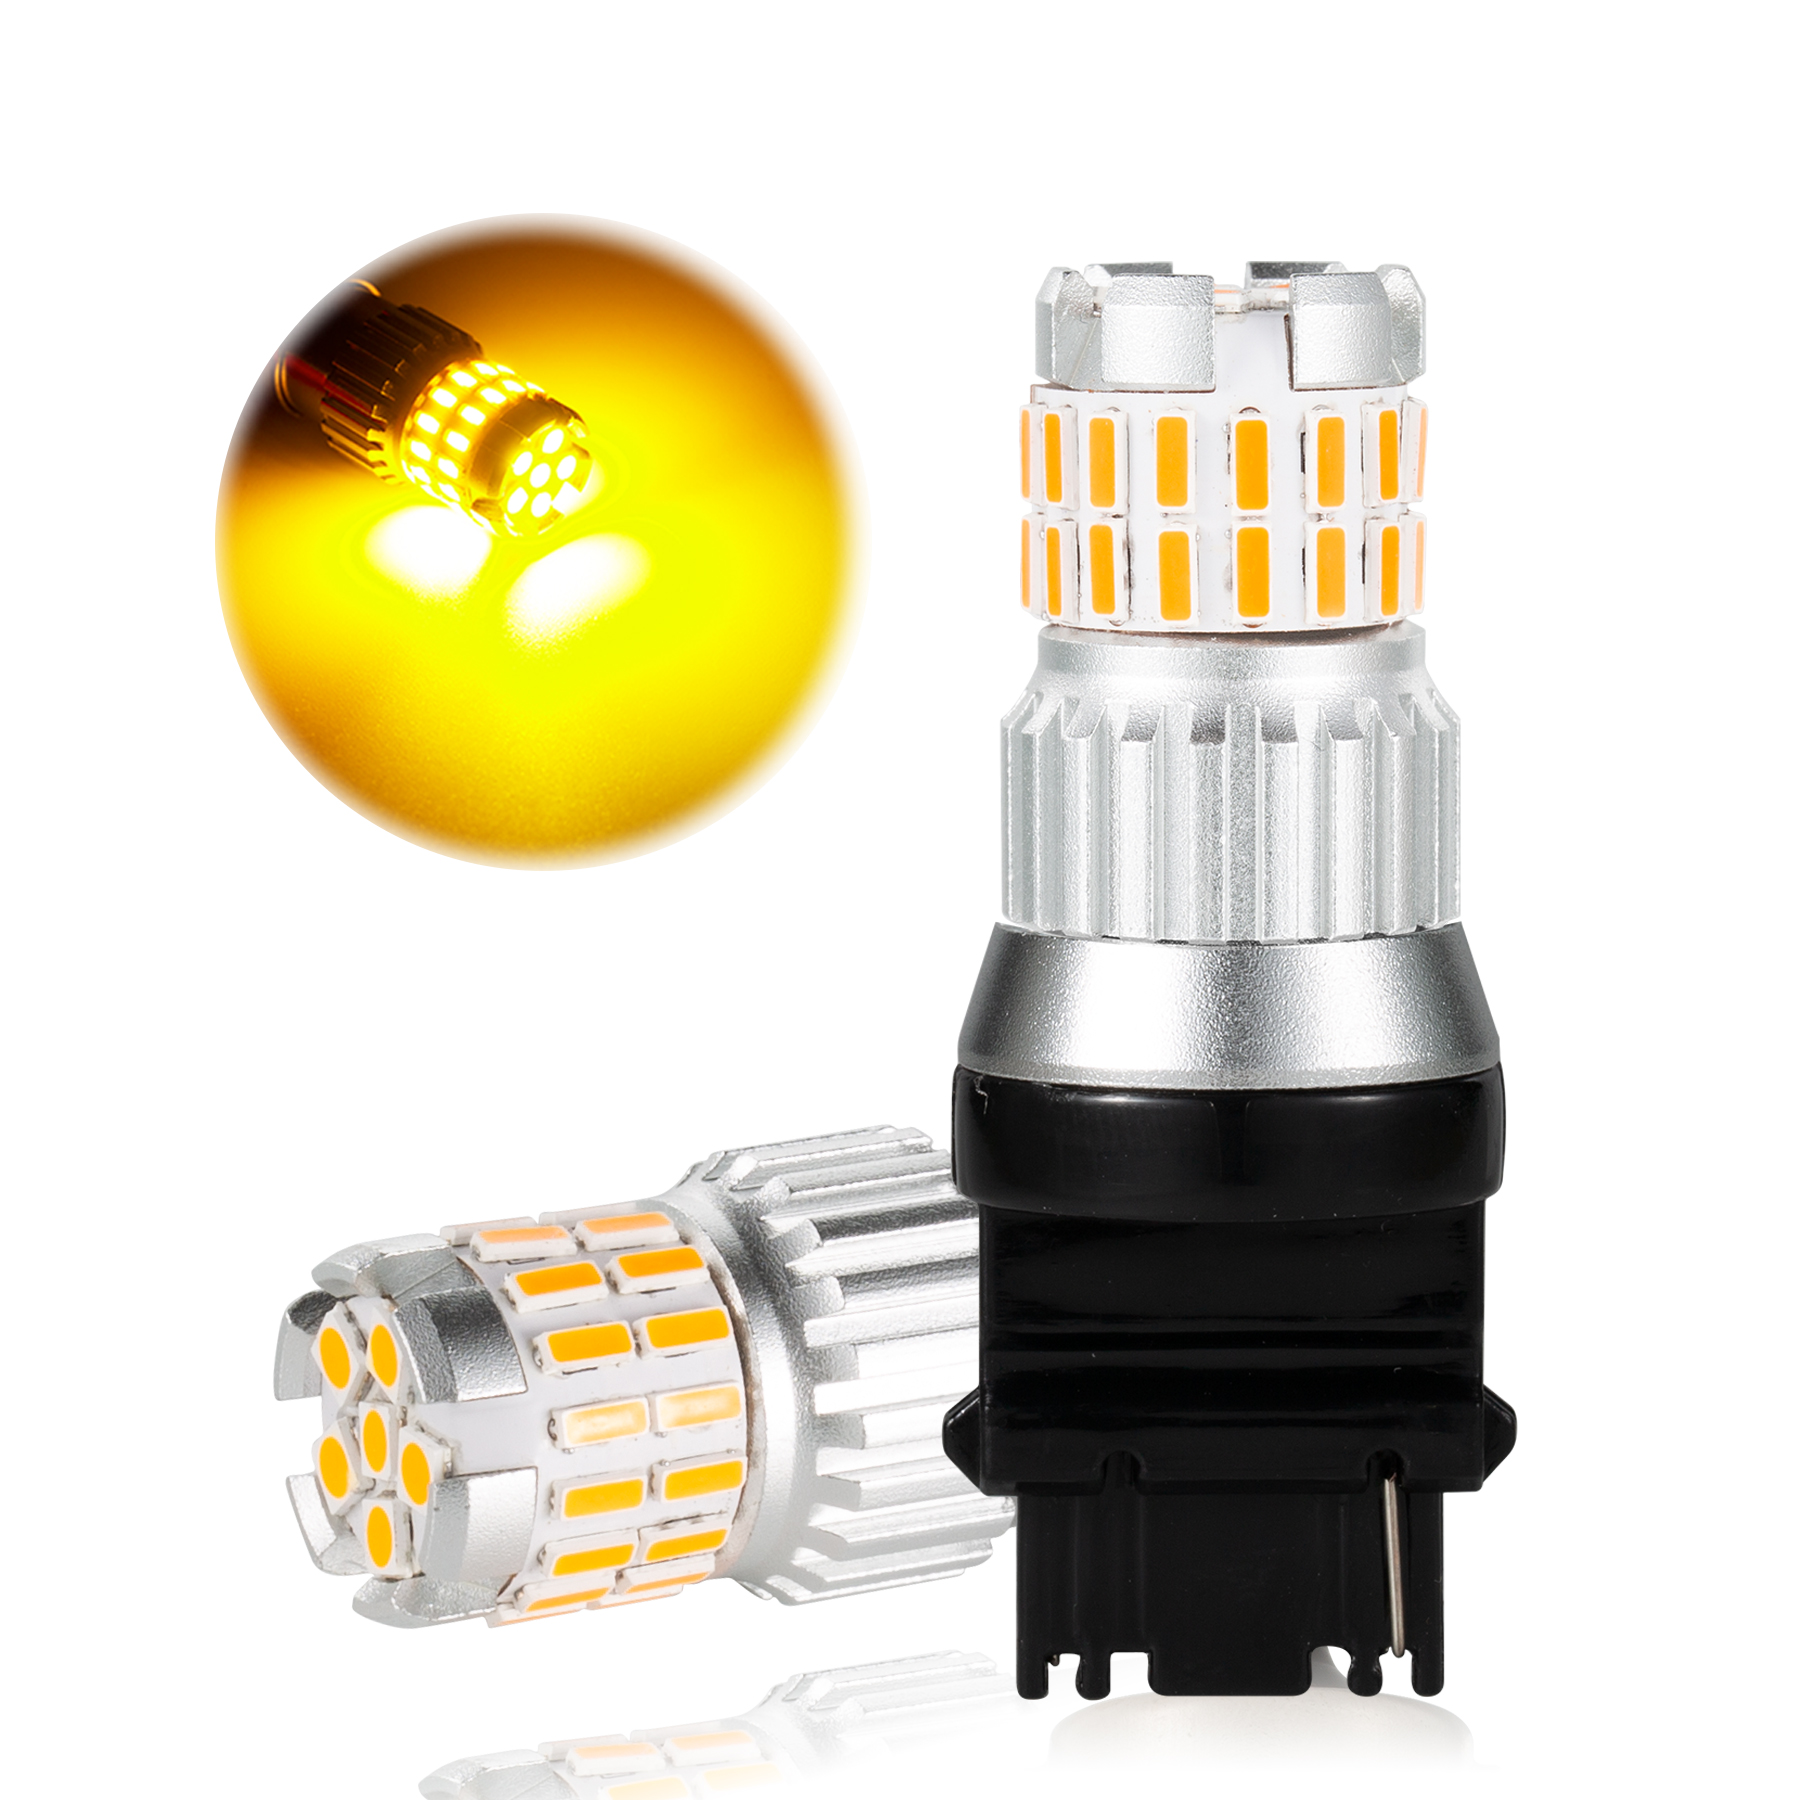 2pcs Fast Heat Dissipation LED Bulb for Car Canbus Waterproof Light 6500K